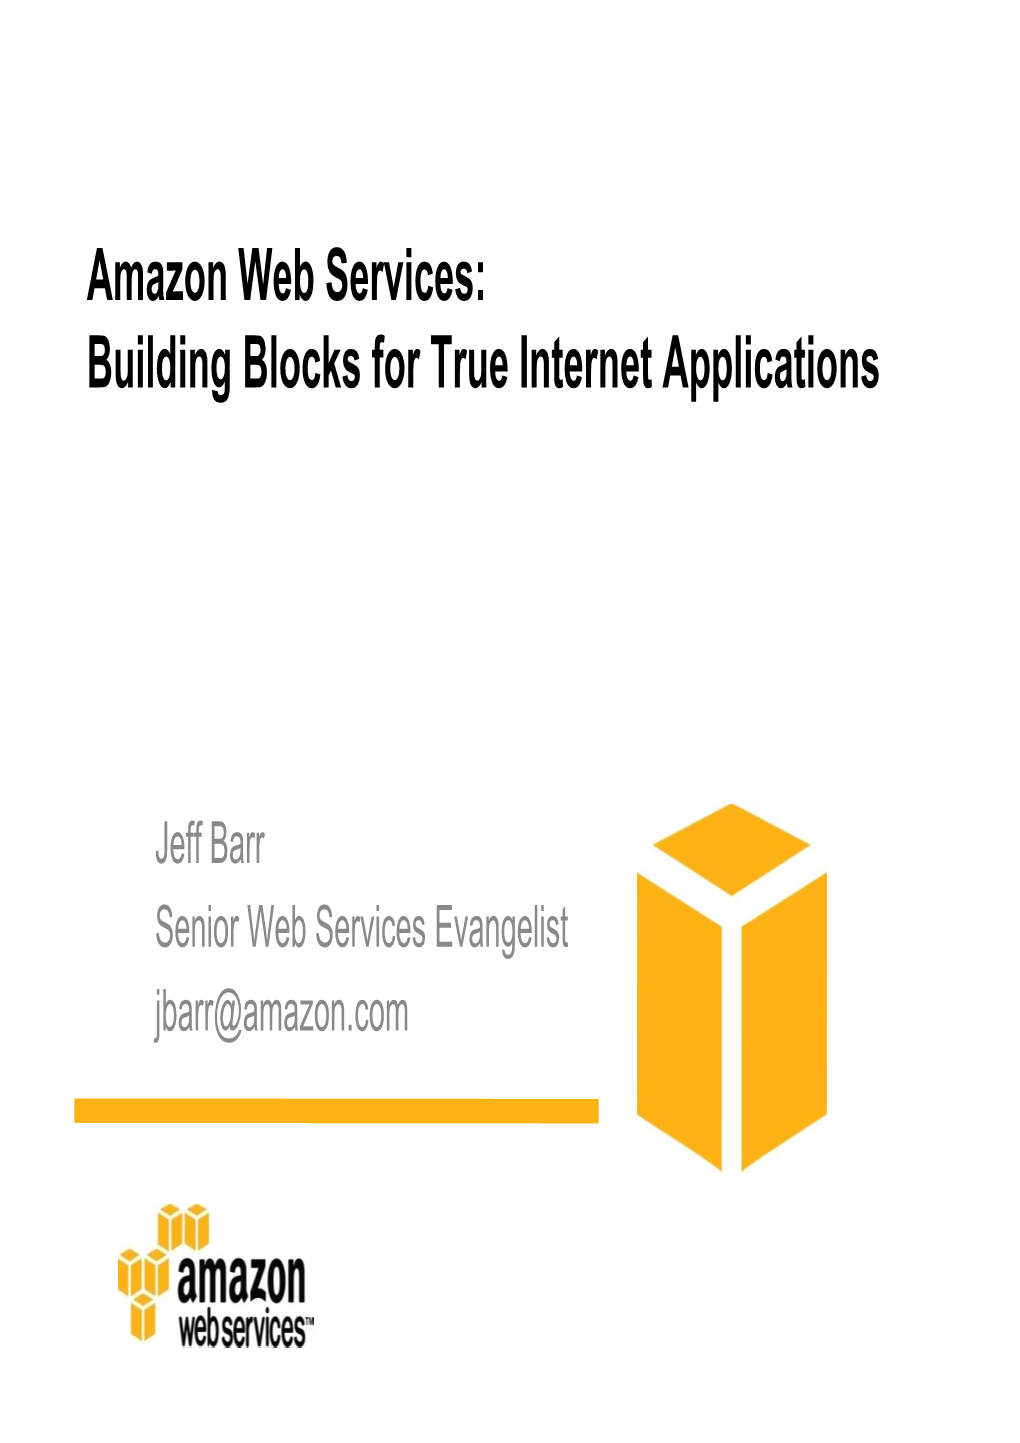 Amazon Web Services: Building Blocks for True Internet Applications